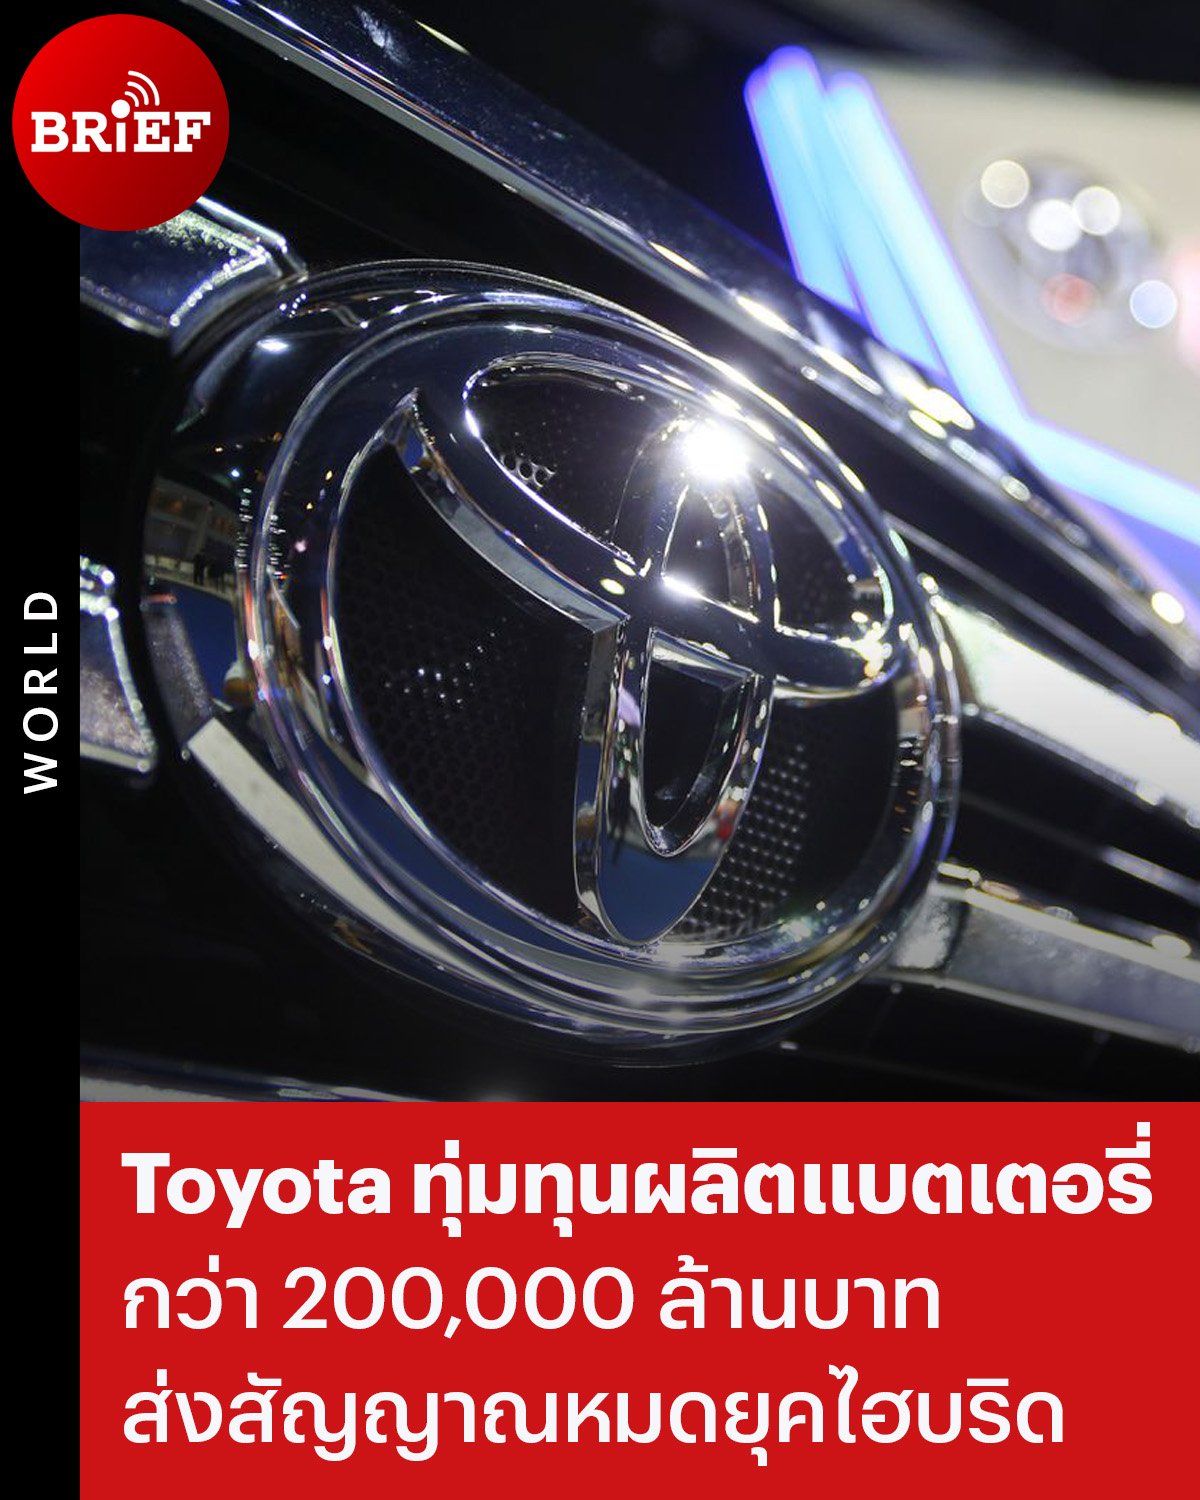  Toyota ทุ่มทุนผลิตแบตเตอรี่ 203,786 ล้านบาท ส่งสัญญาณหมดยุคไฮบริด